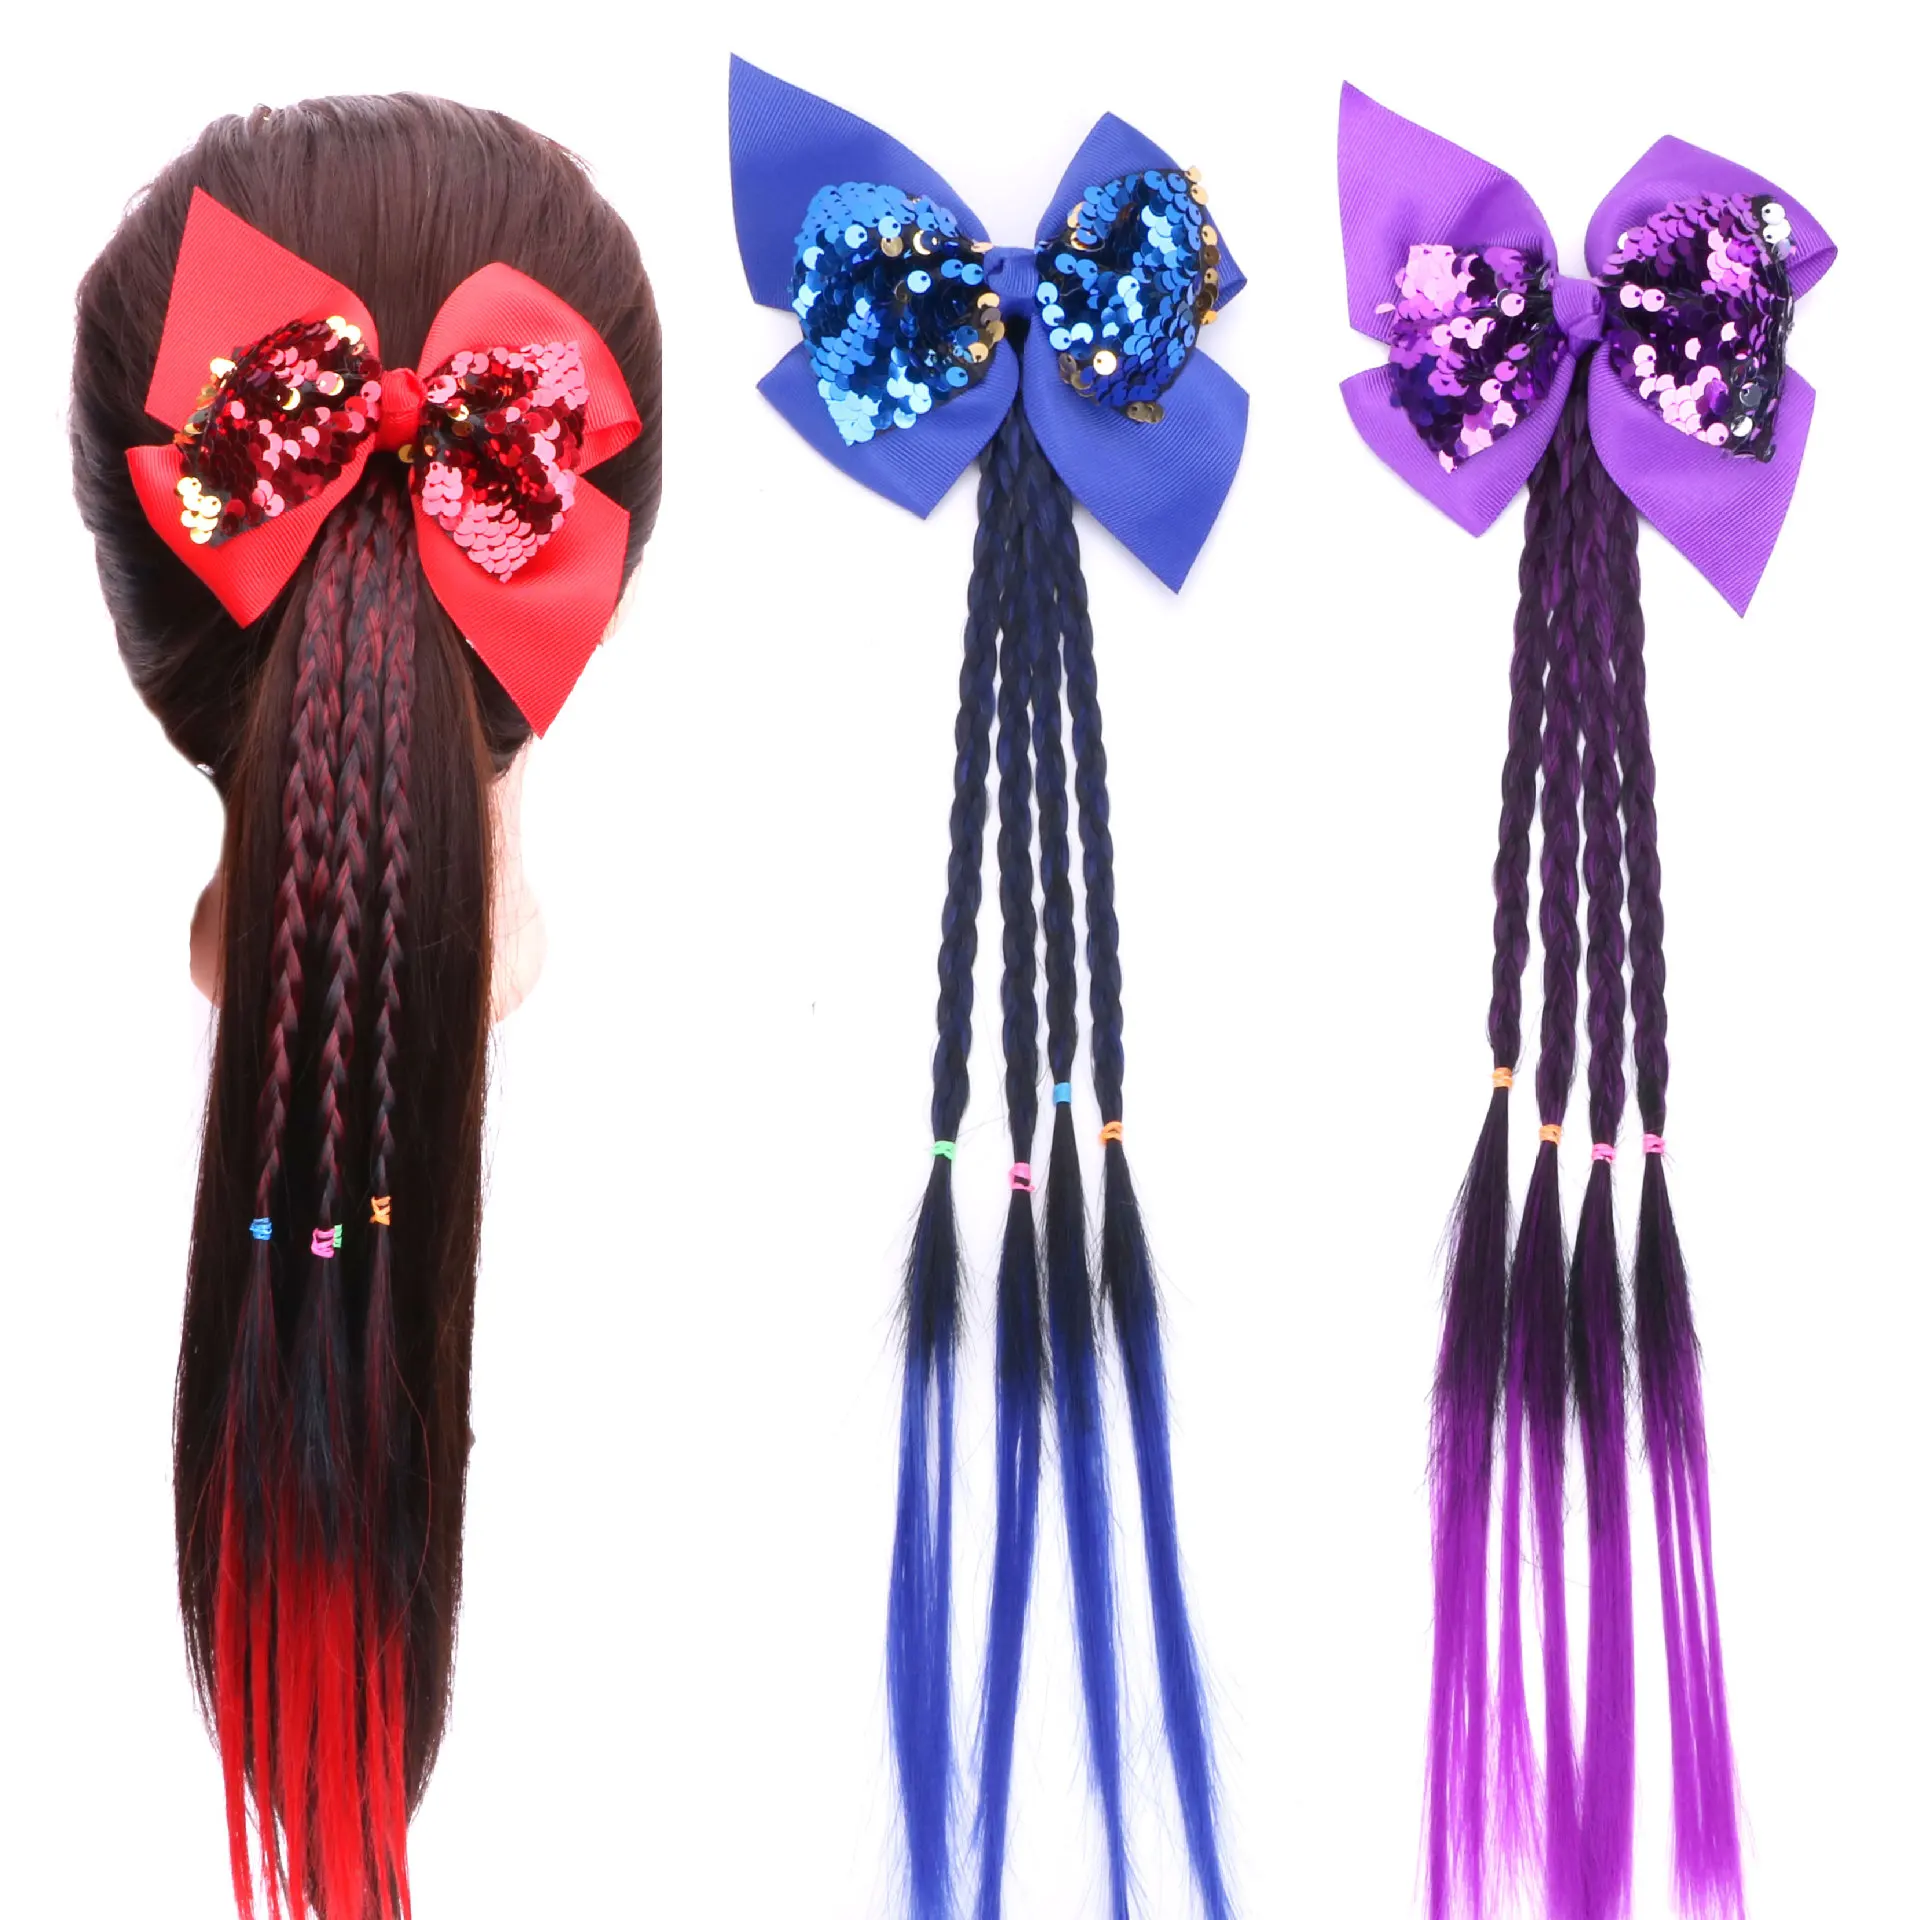 

New Hot Sale Children'S Sequined Bow Gradient Twist Braid Rainbow Hair Accessories For Braids, Pic showed